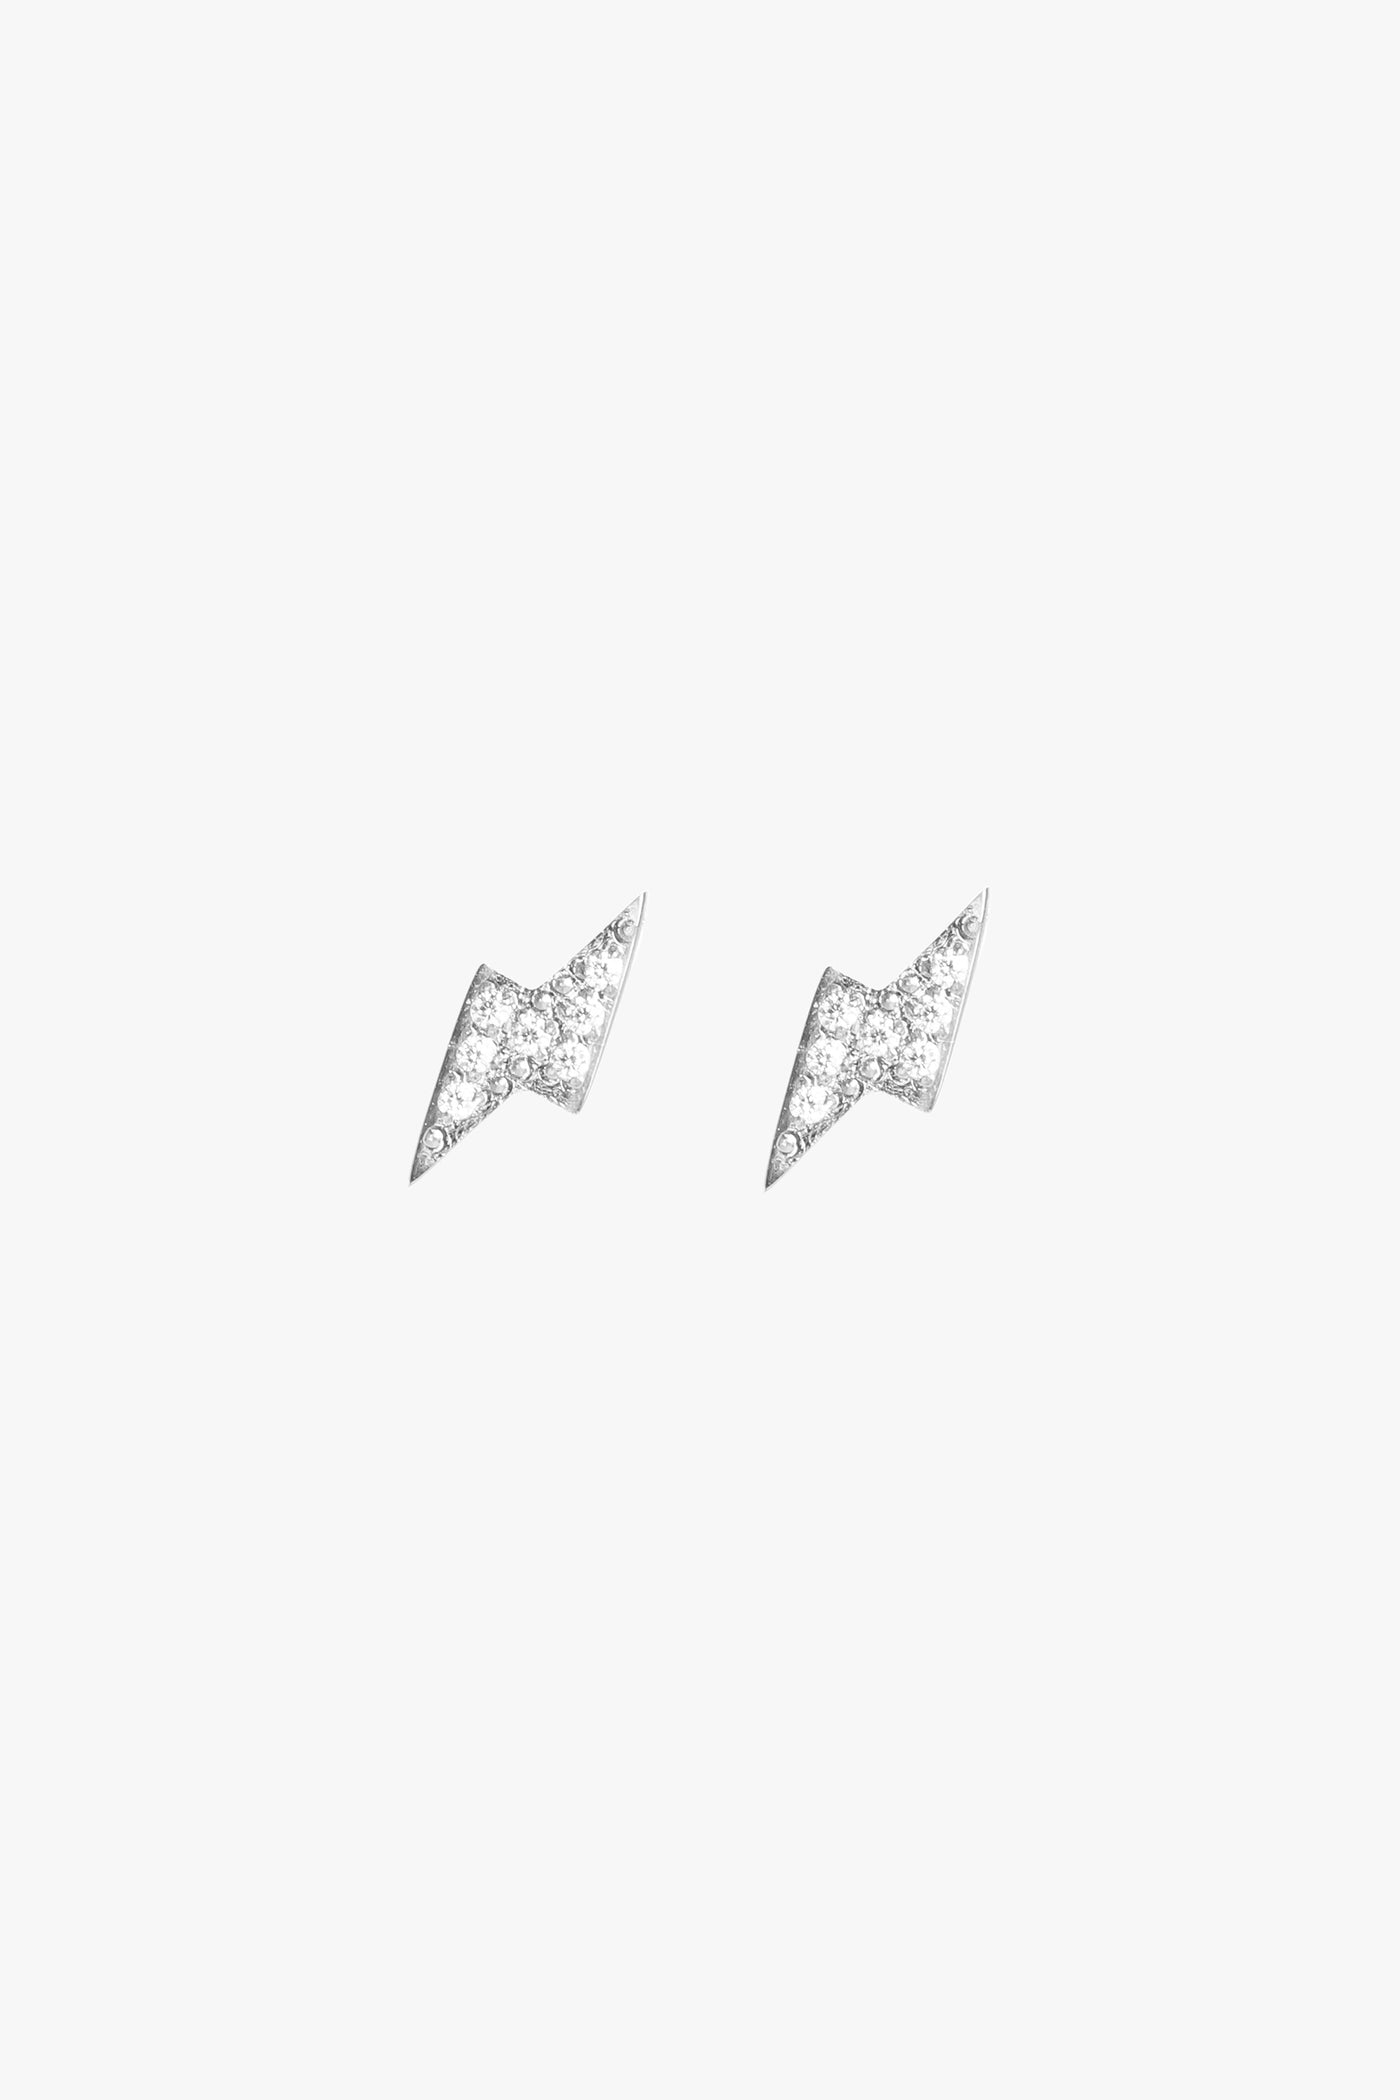 Marrin Costello Jewelry Bolt Studs lightning bolt CZ post back earrings — for pierced ears. Waterproof, sustainable, hypoallergenic. Polished stainless steel.